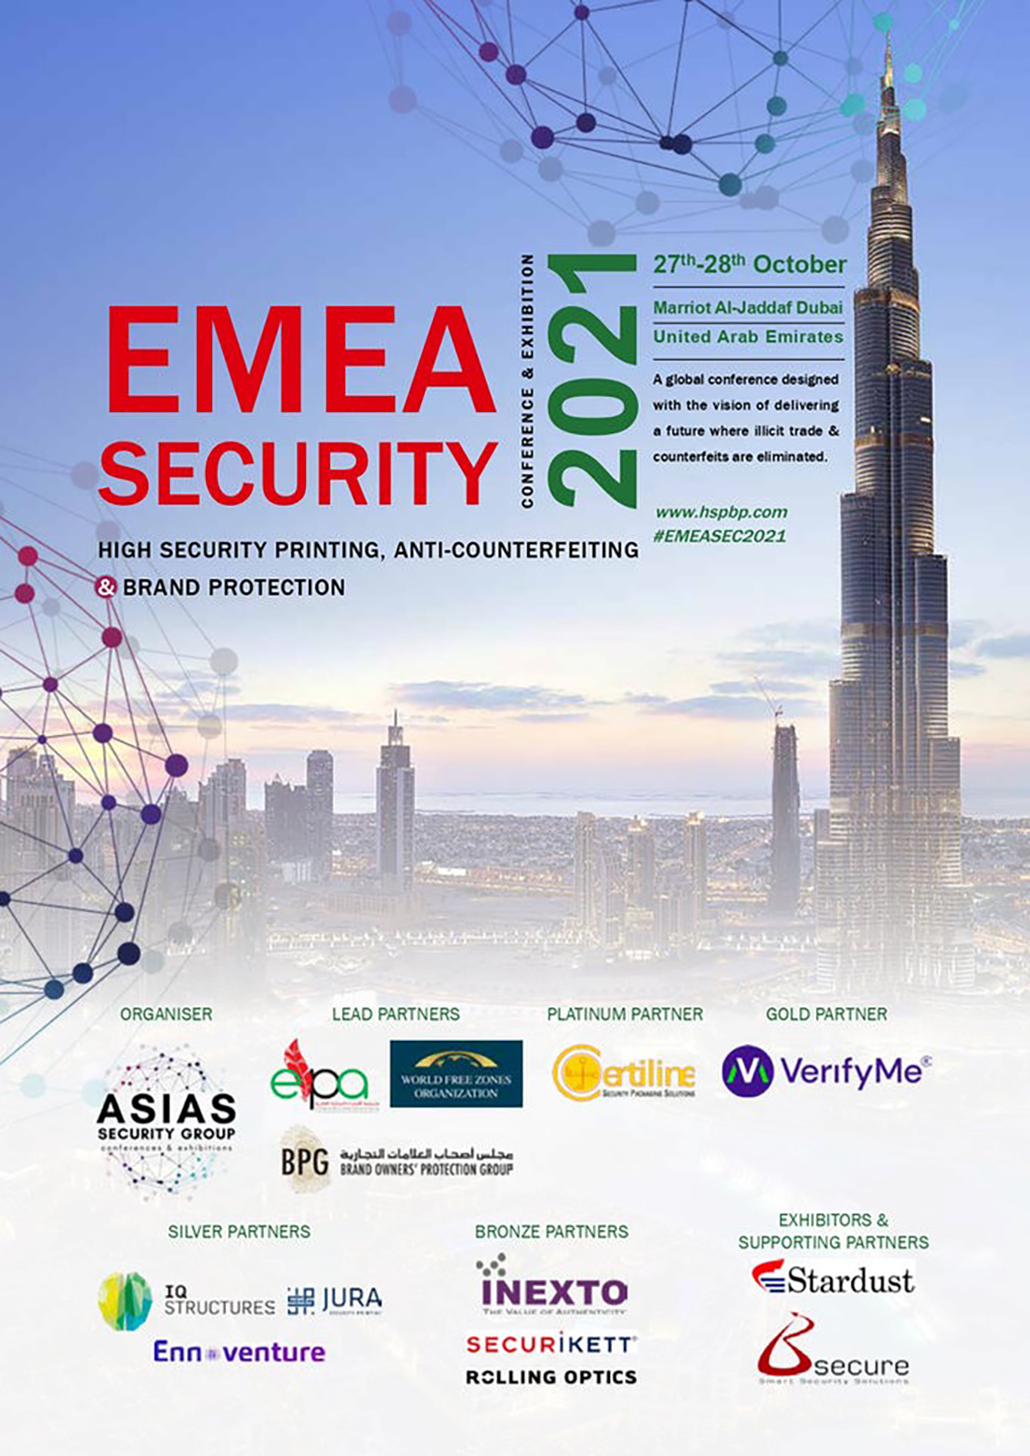 EMEA High Security Printing, Anticounterfeiting Brand Protection